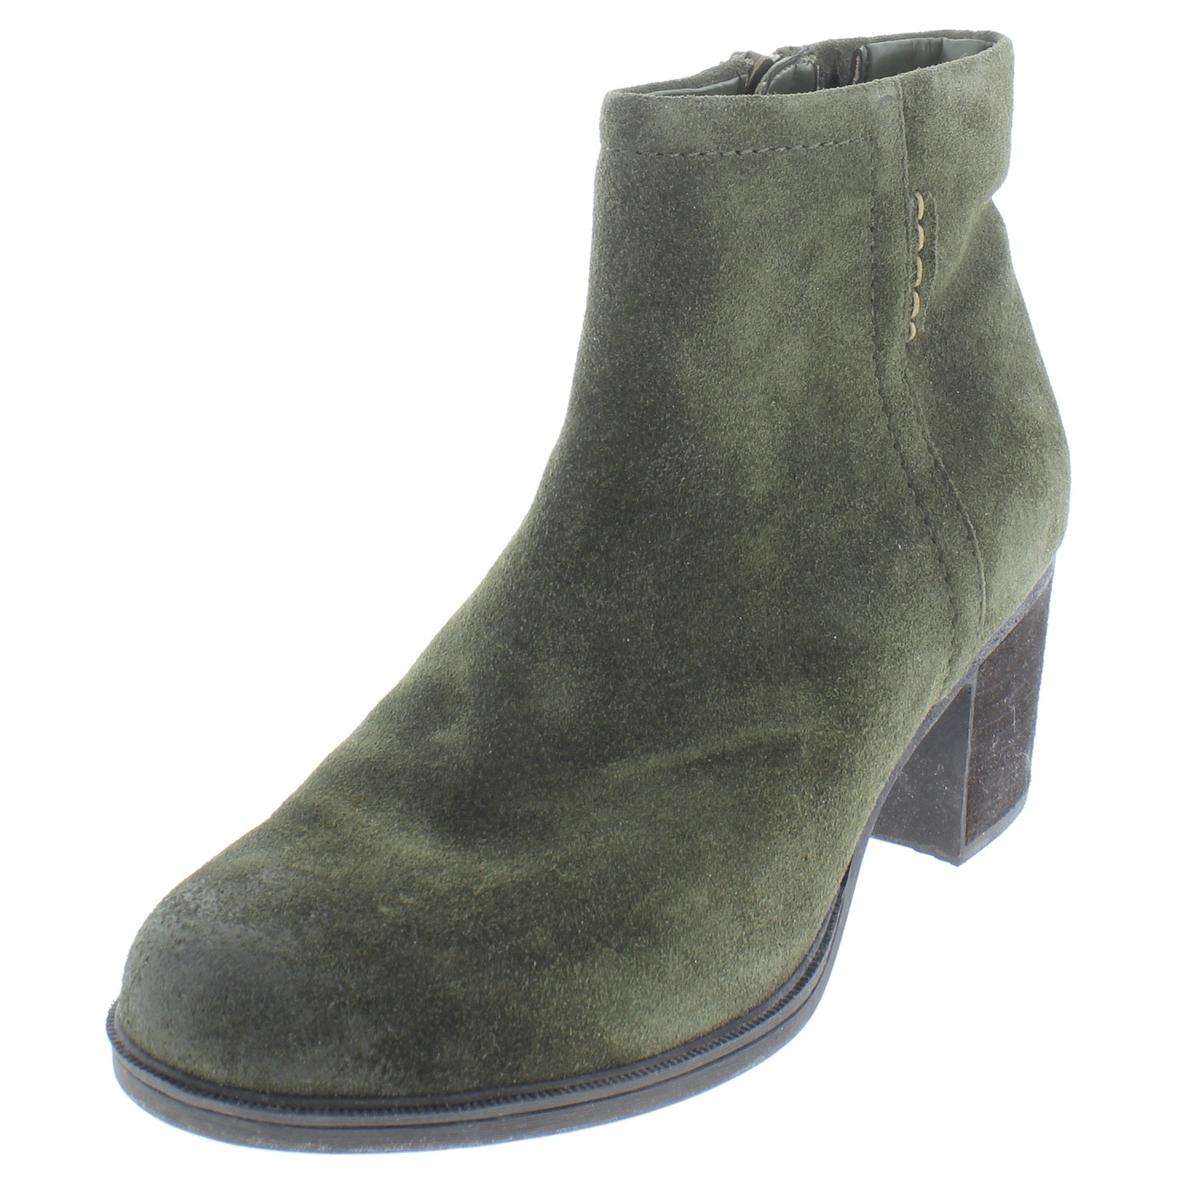 Rockport Womens Green Suede Stacked Heel Booties Shoes 7 Medium (B,M ...